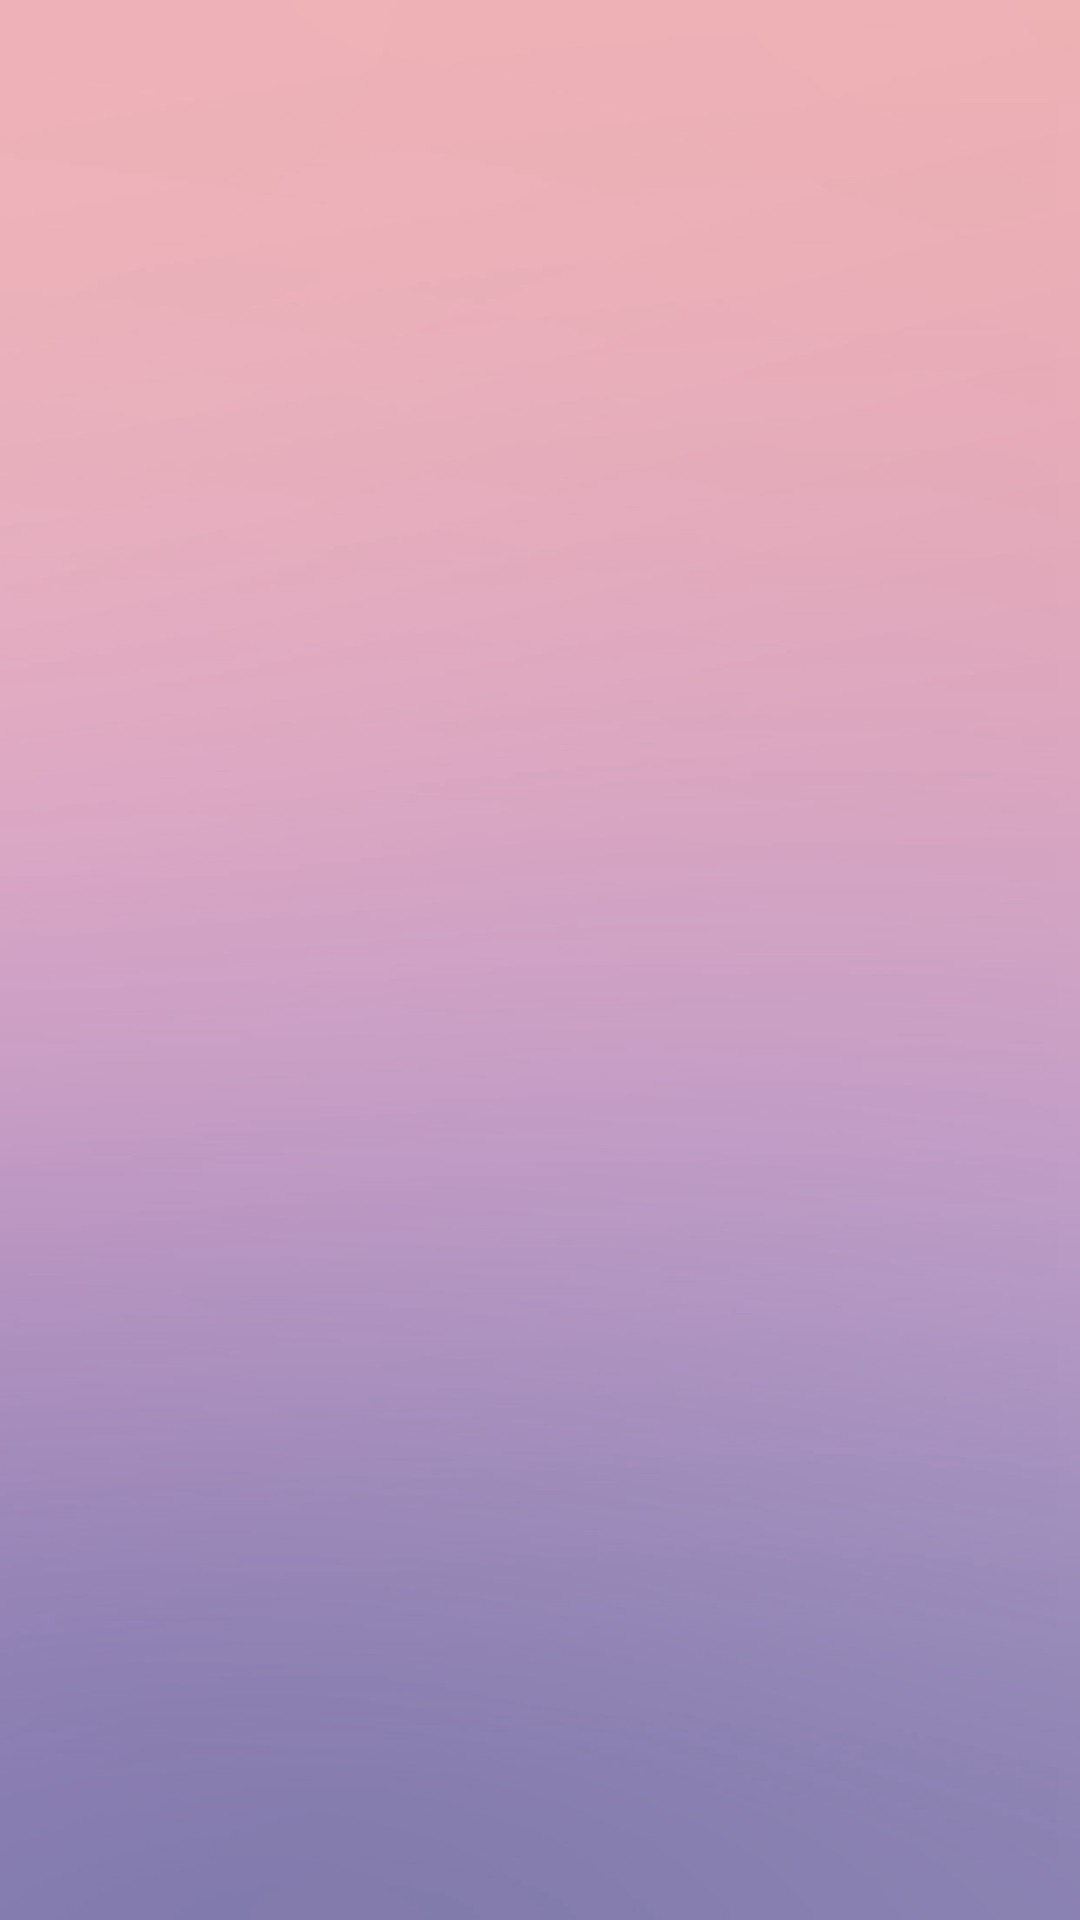 1080x1920 Pink Blue Purple Harmony Gradation Blur iPhone 6 wallpaper